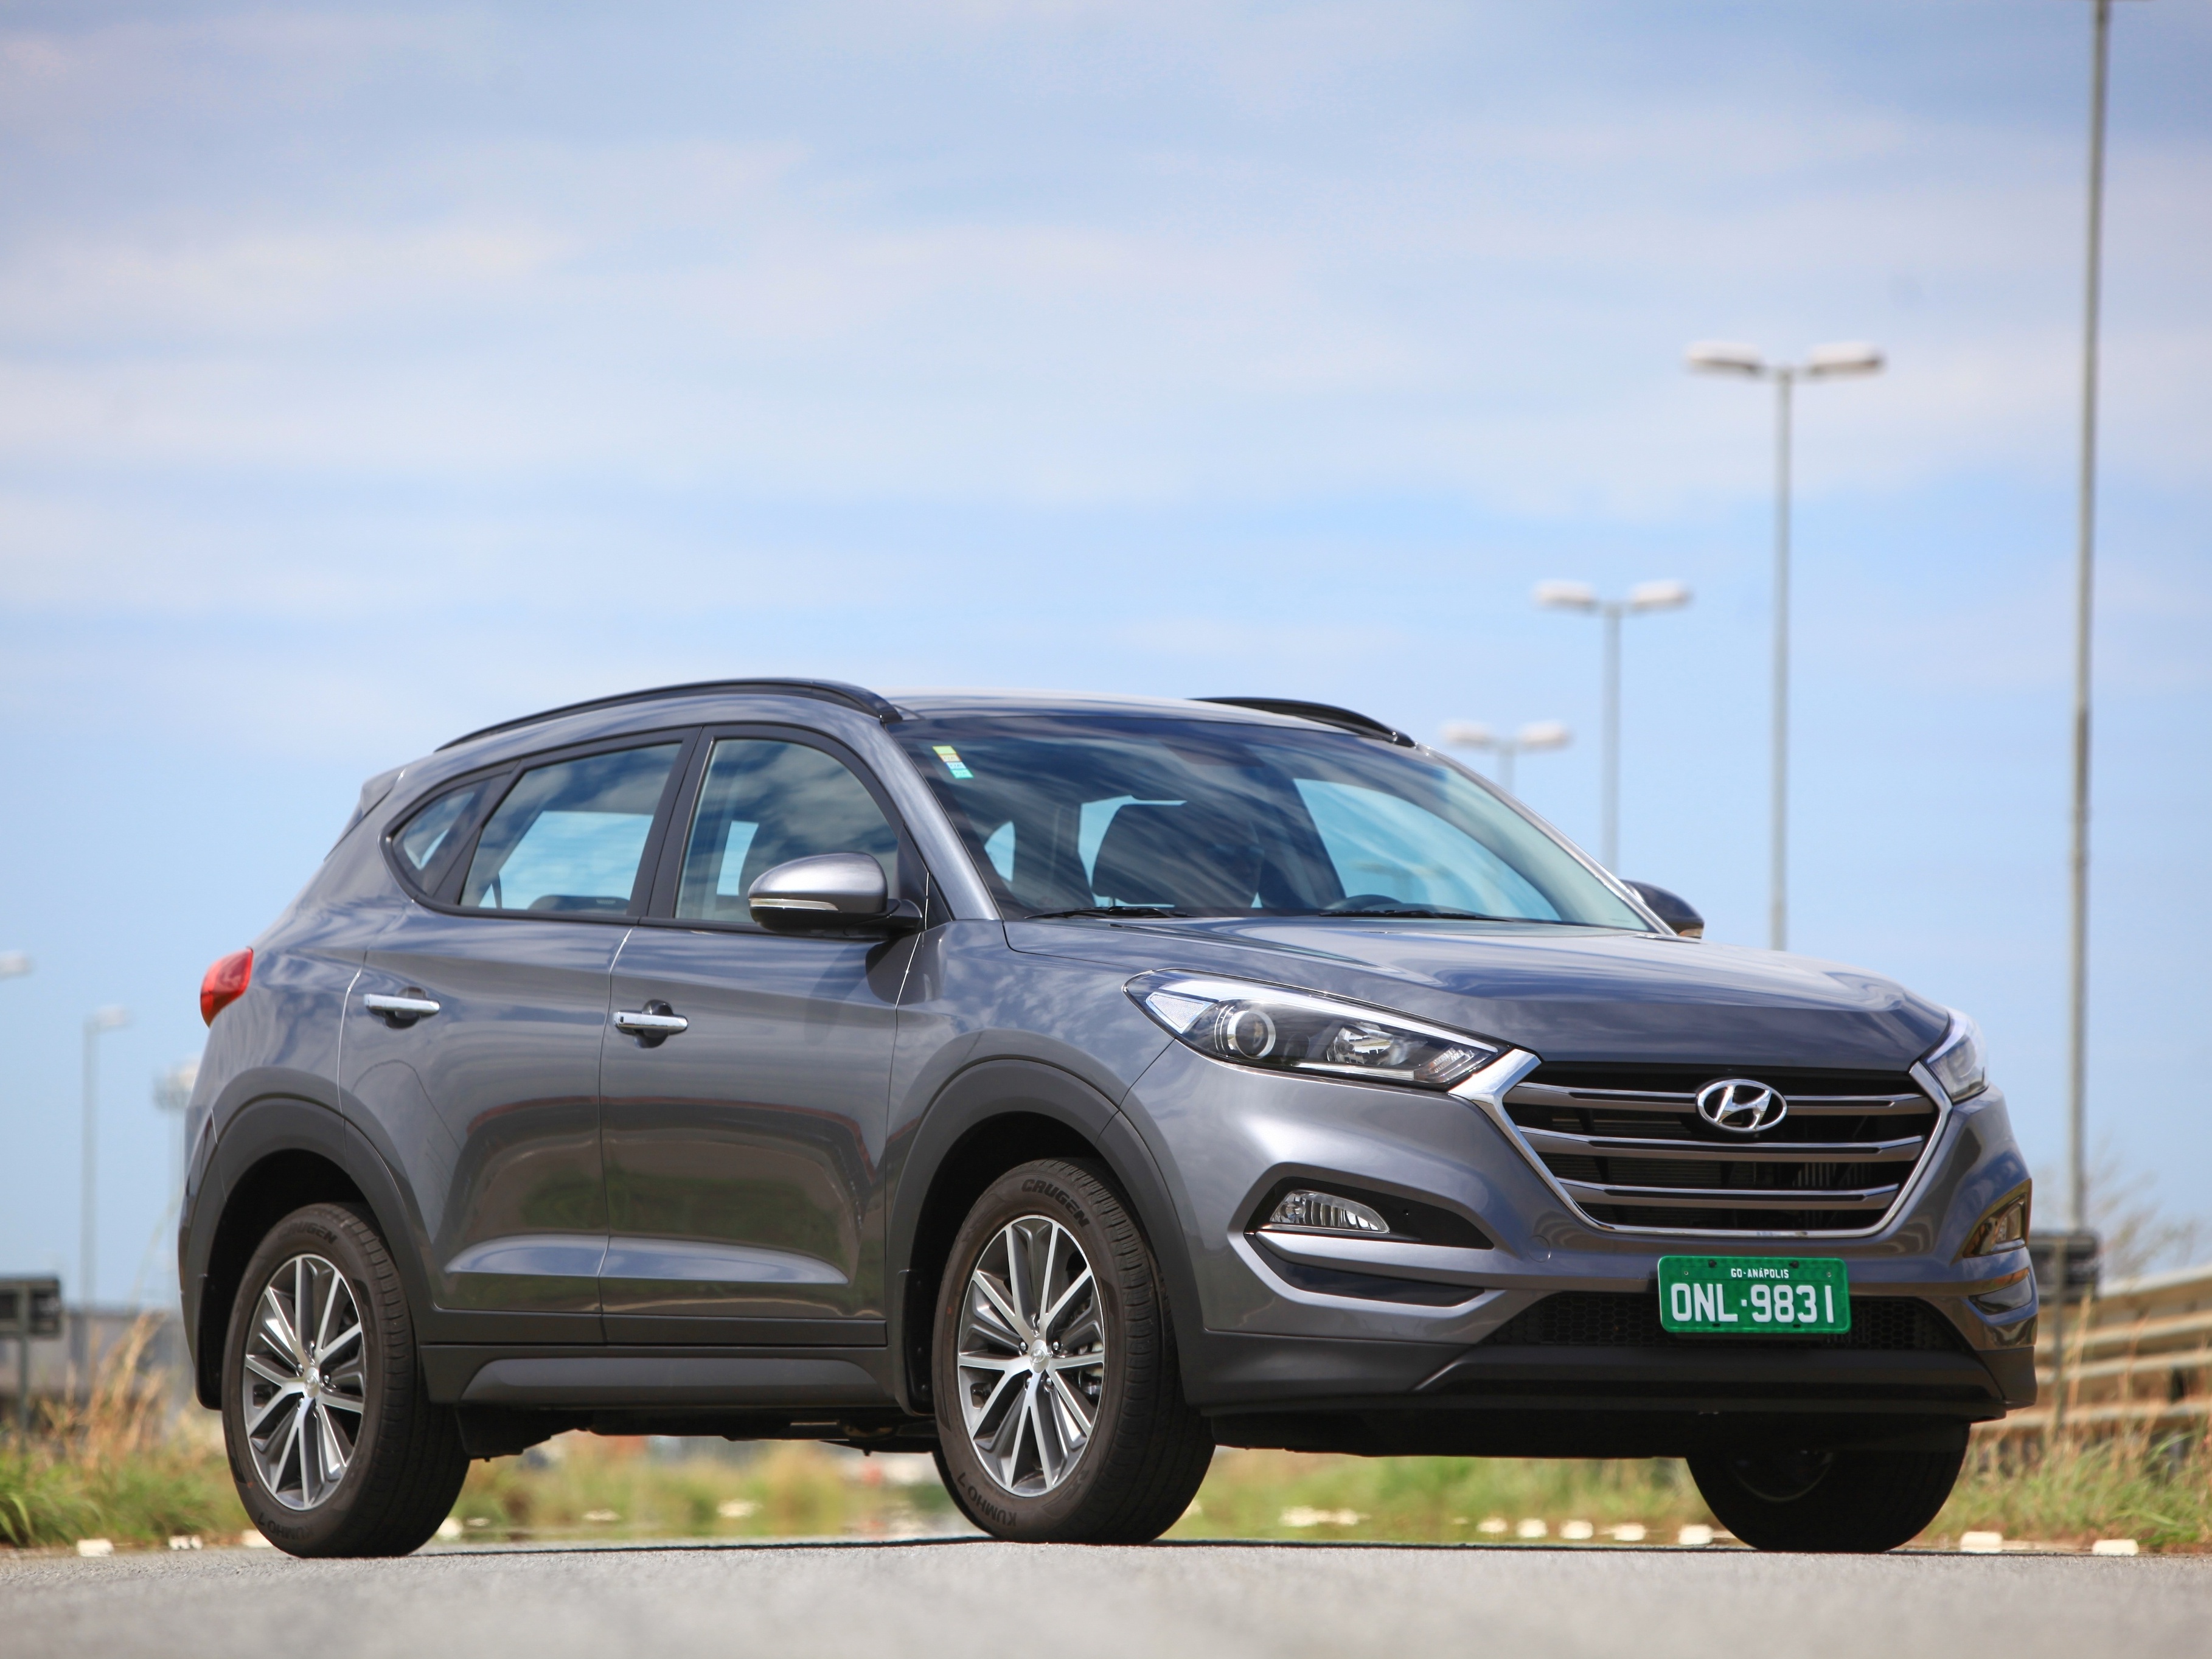 Hyundai New Tucson 2017 - Carros na Web 